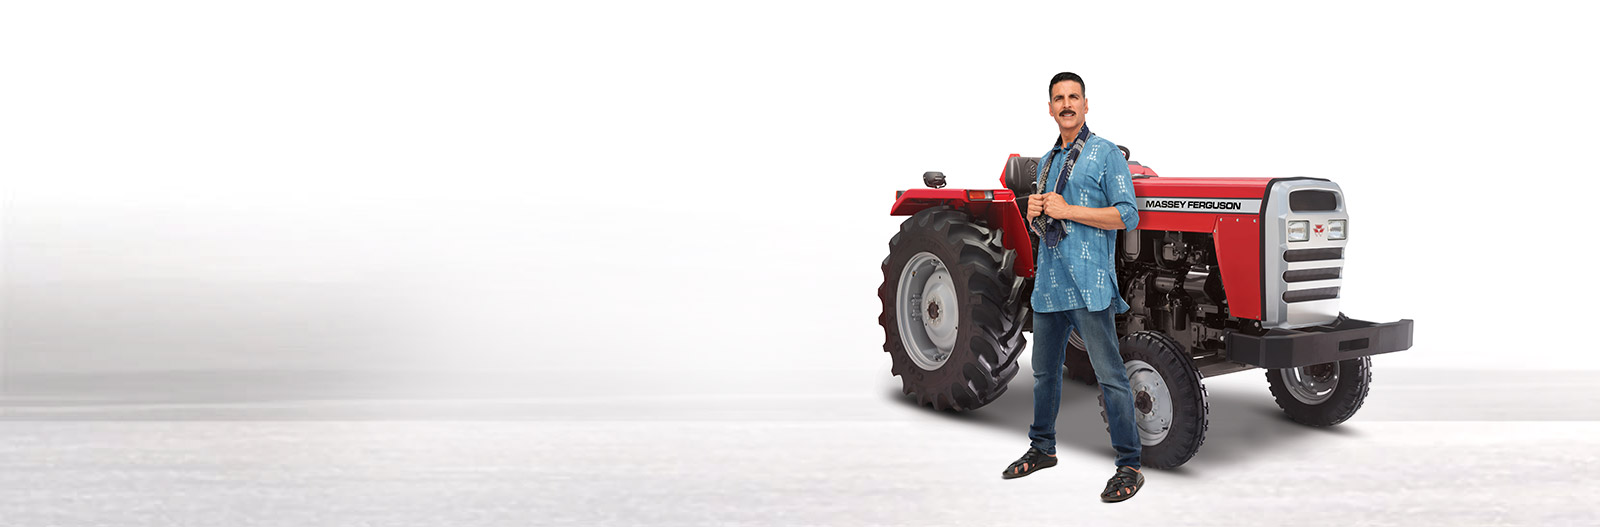 TAFE signs on Akshay Kumar as the brand ambassador for Massey Ferguson tractors